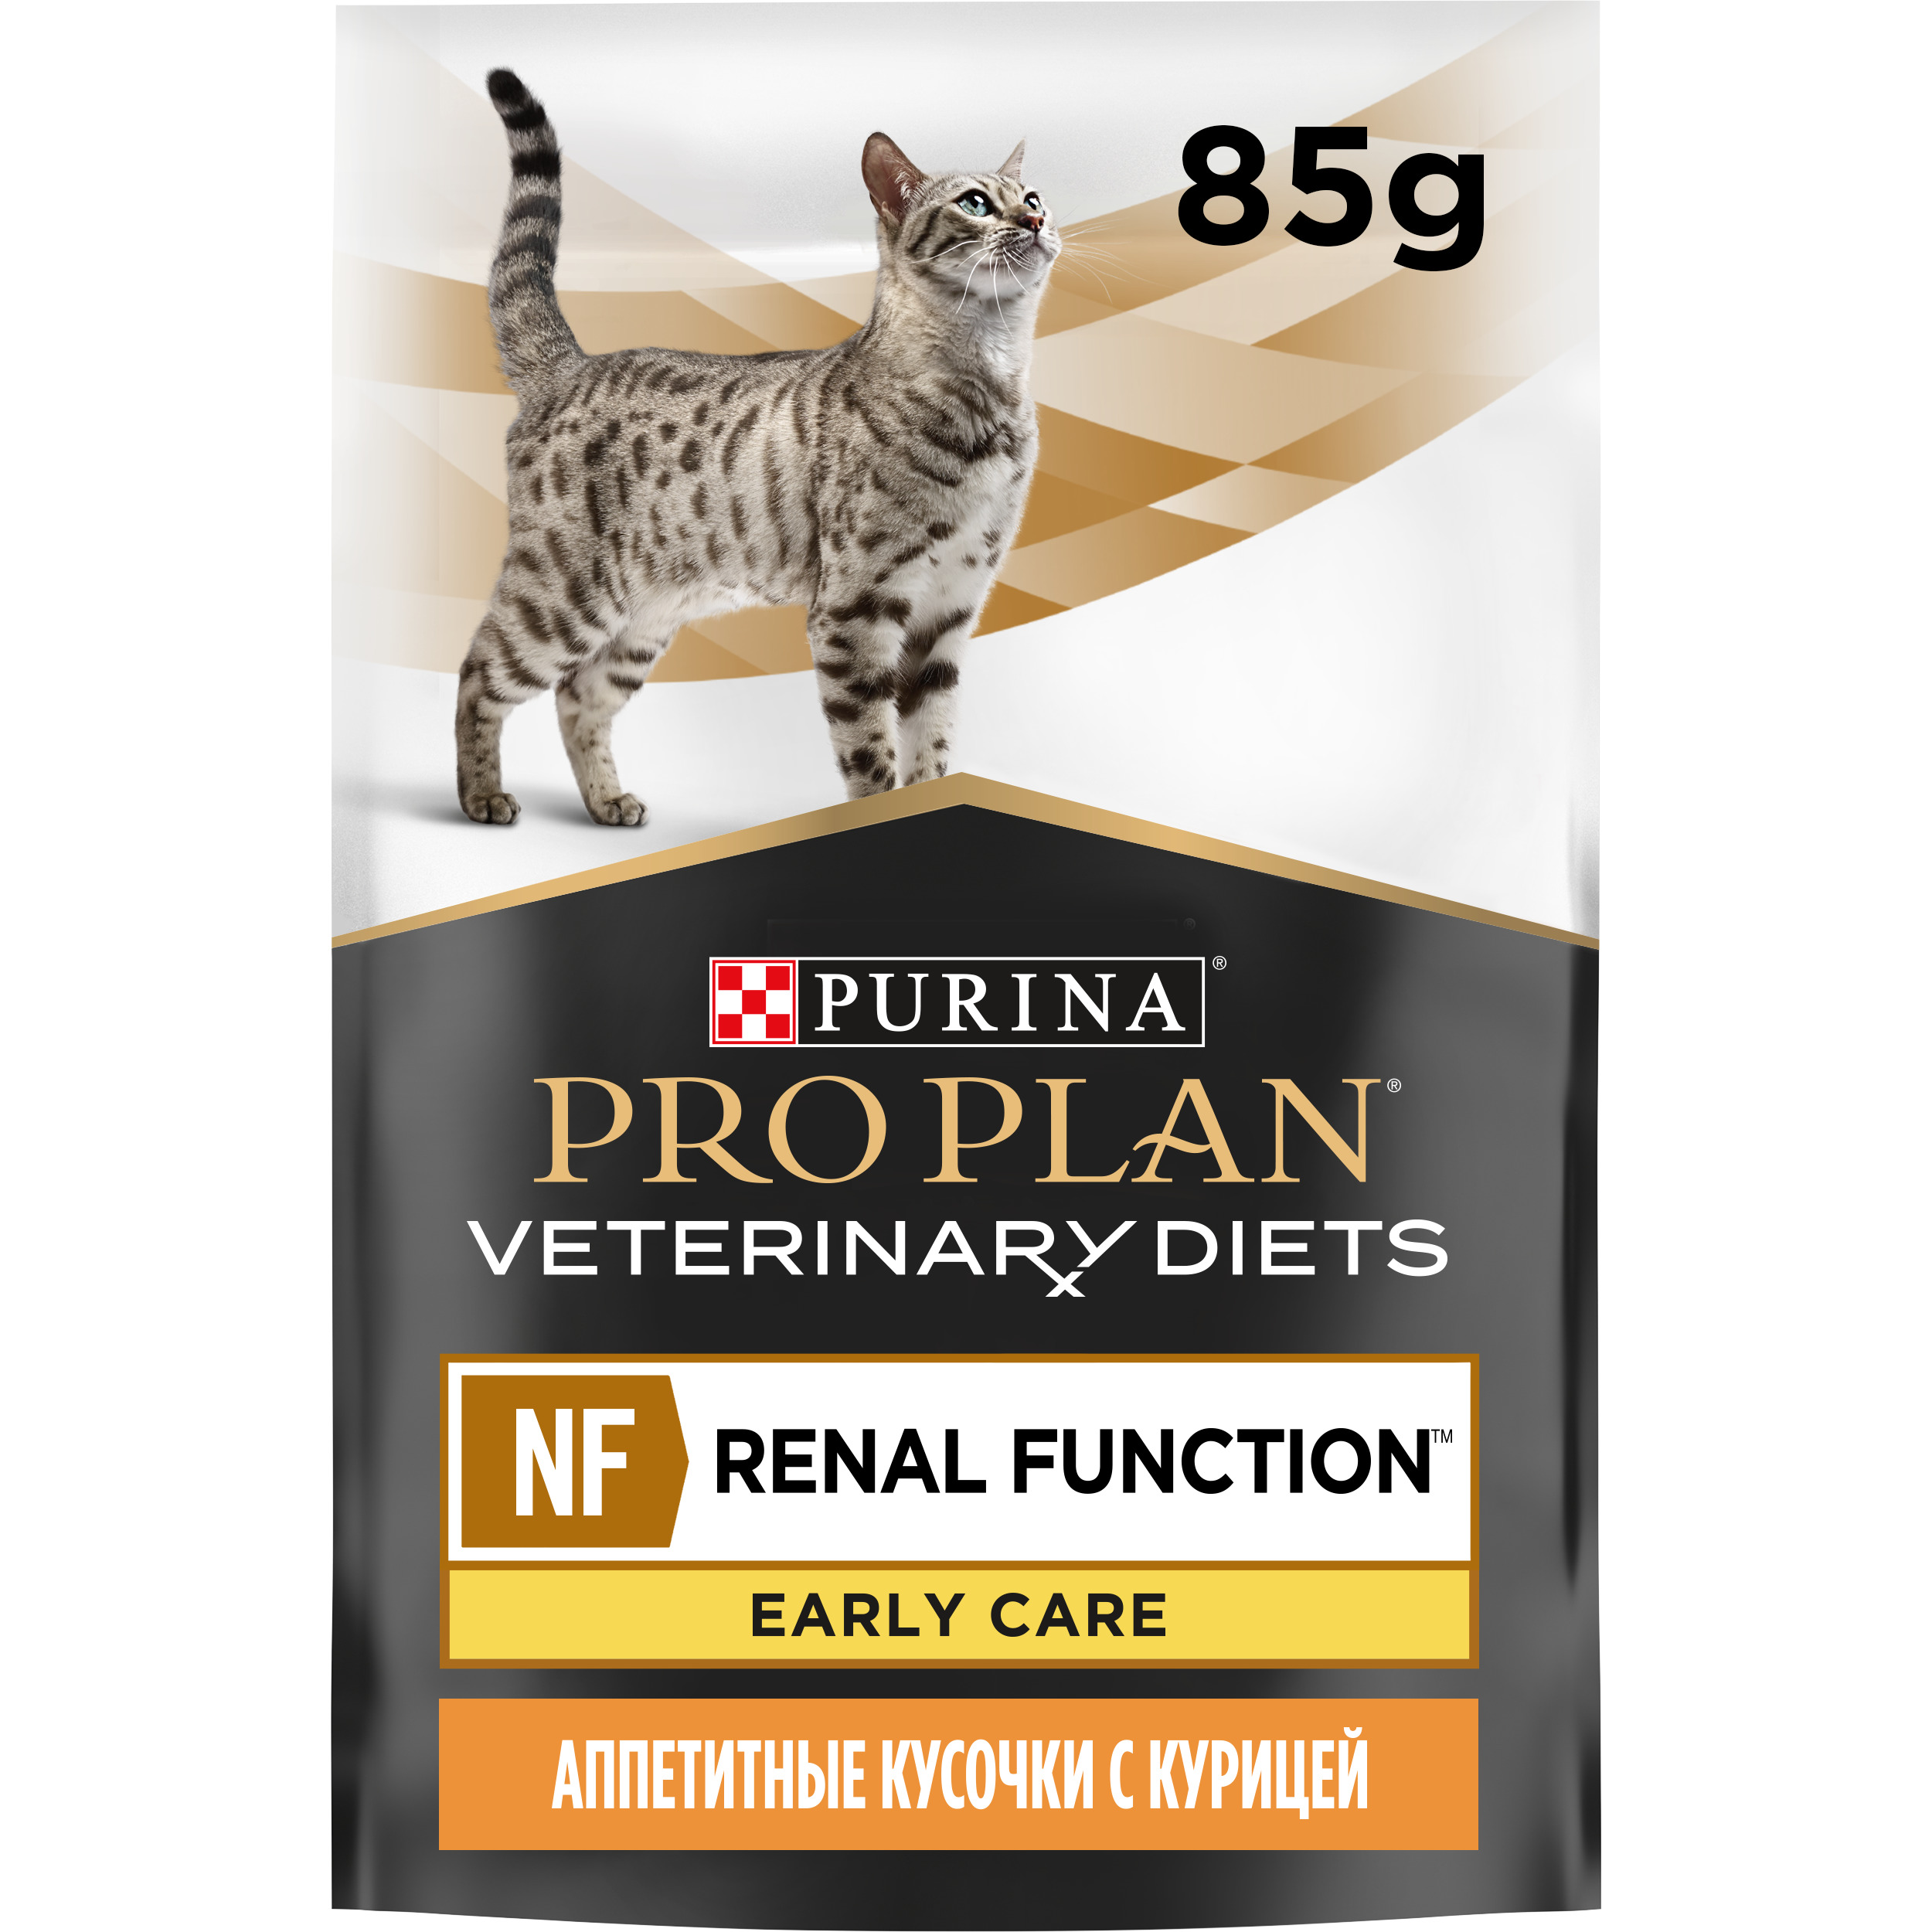 Pro plan renal купить. Pro Plan renal early Care. Purina Pro Plan renal function для кошек. Pro Plan Veterinary Diets renal function для кошек. Pro Plan renal function для кошек.